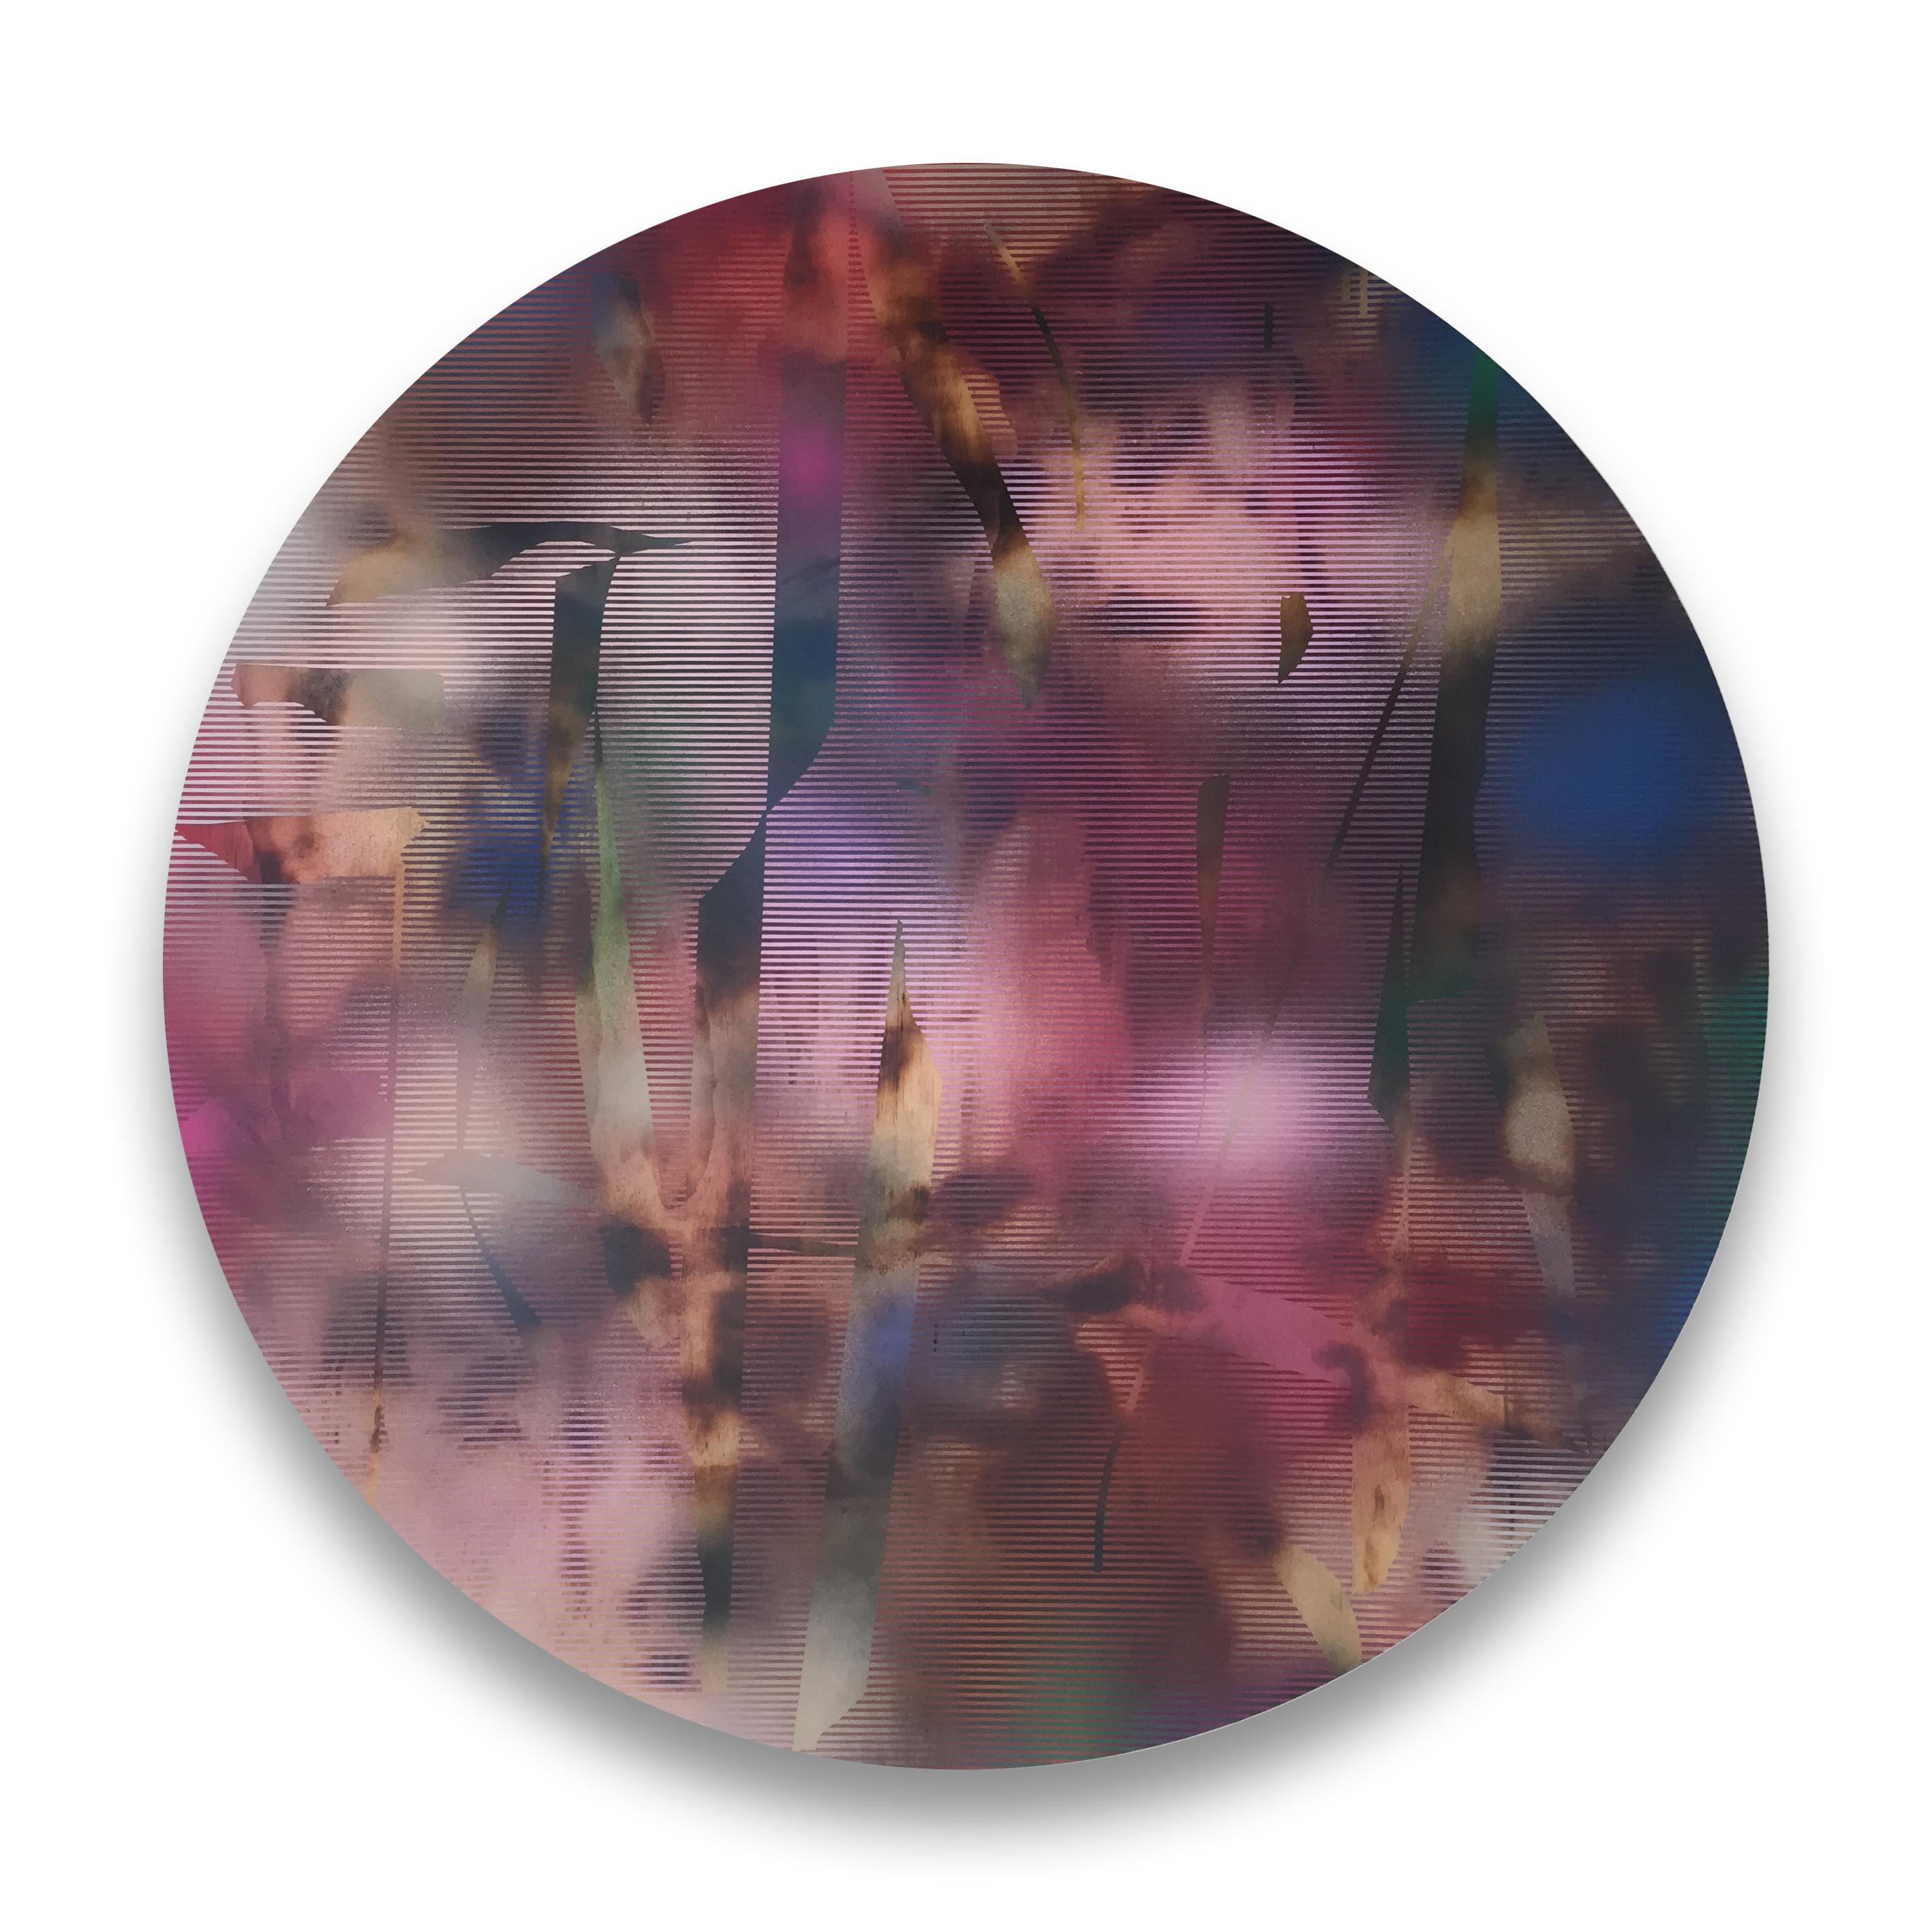 Cascadia 1 (grid painting abstract wood round circular panel contemporary art) - Mixed Media Art by Melisa Taylor Metzger